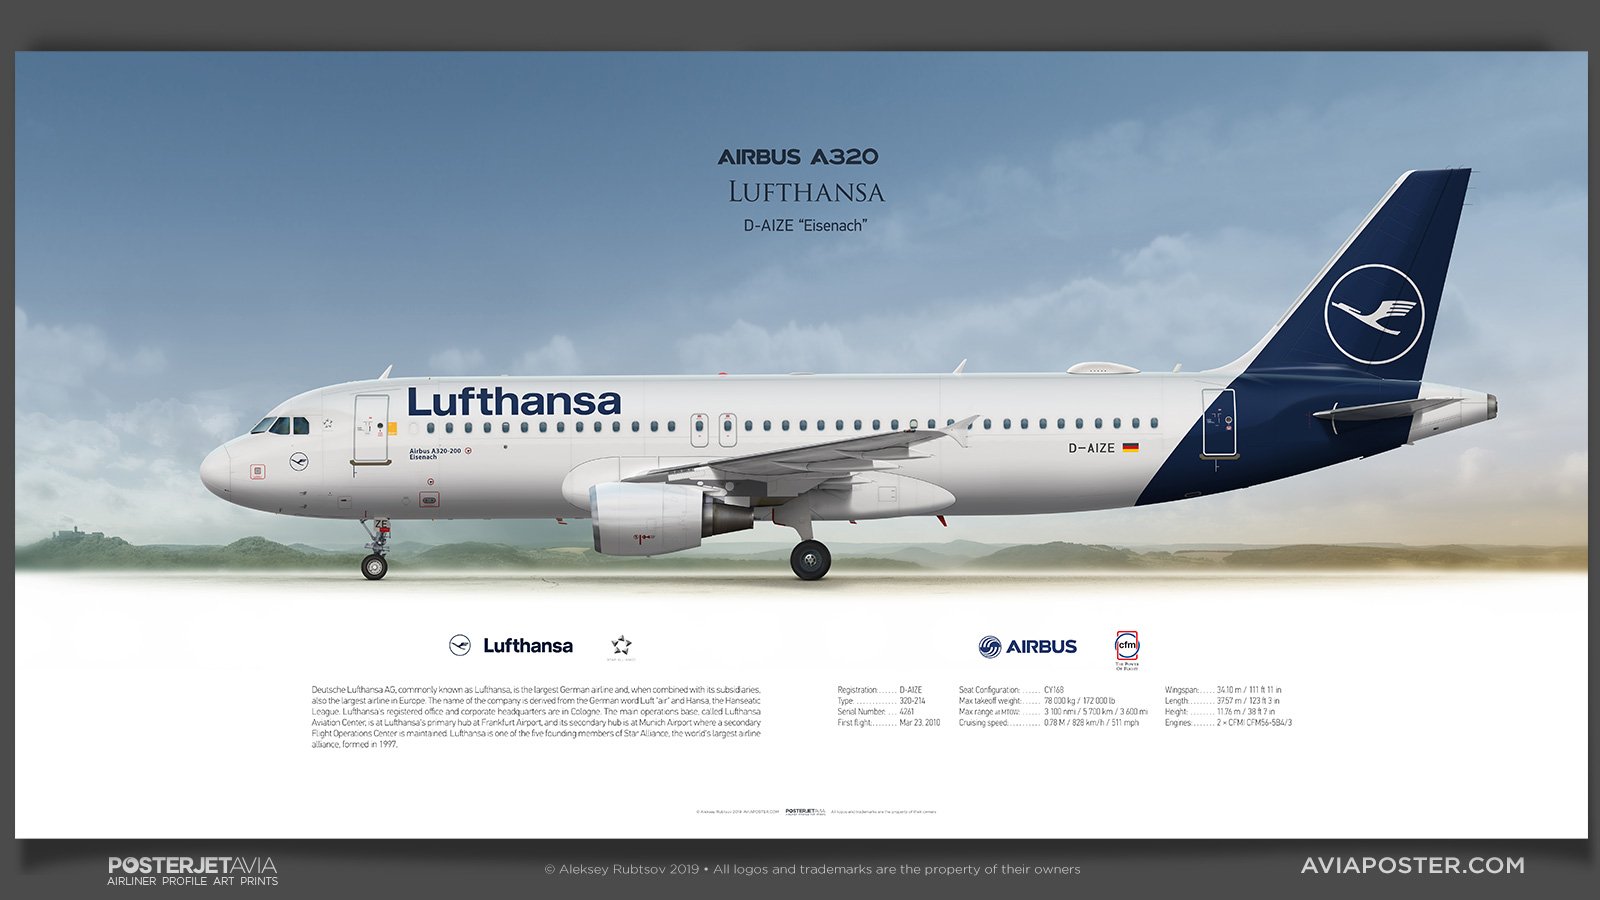 Aviaposter - Profile Art Prints on X: Airbus A320 #Lufthansa D-AIZE  #PosterjetAvia  Airliner Profile Art Prints   #aviation #avgeek #airplane #planes #instapilot #pilotlife #aviationpics  #instagramaviation #instaplane #airplanes